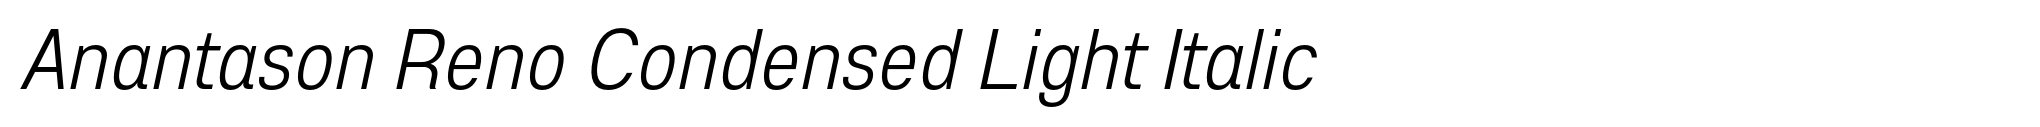 Anantason Reno Condensed Light Italic image